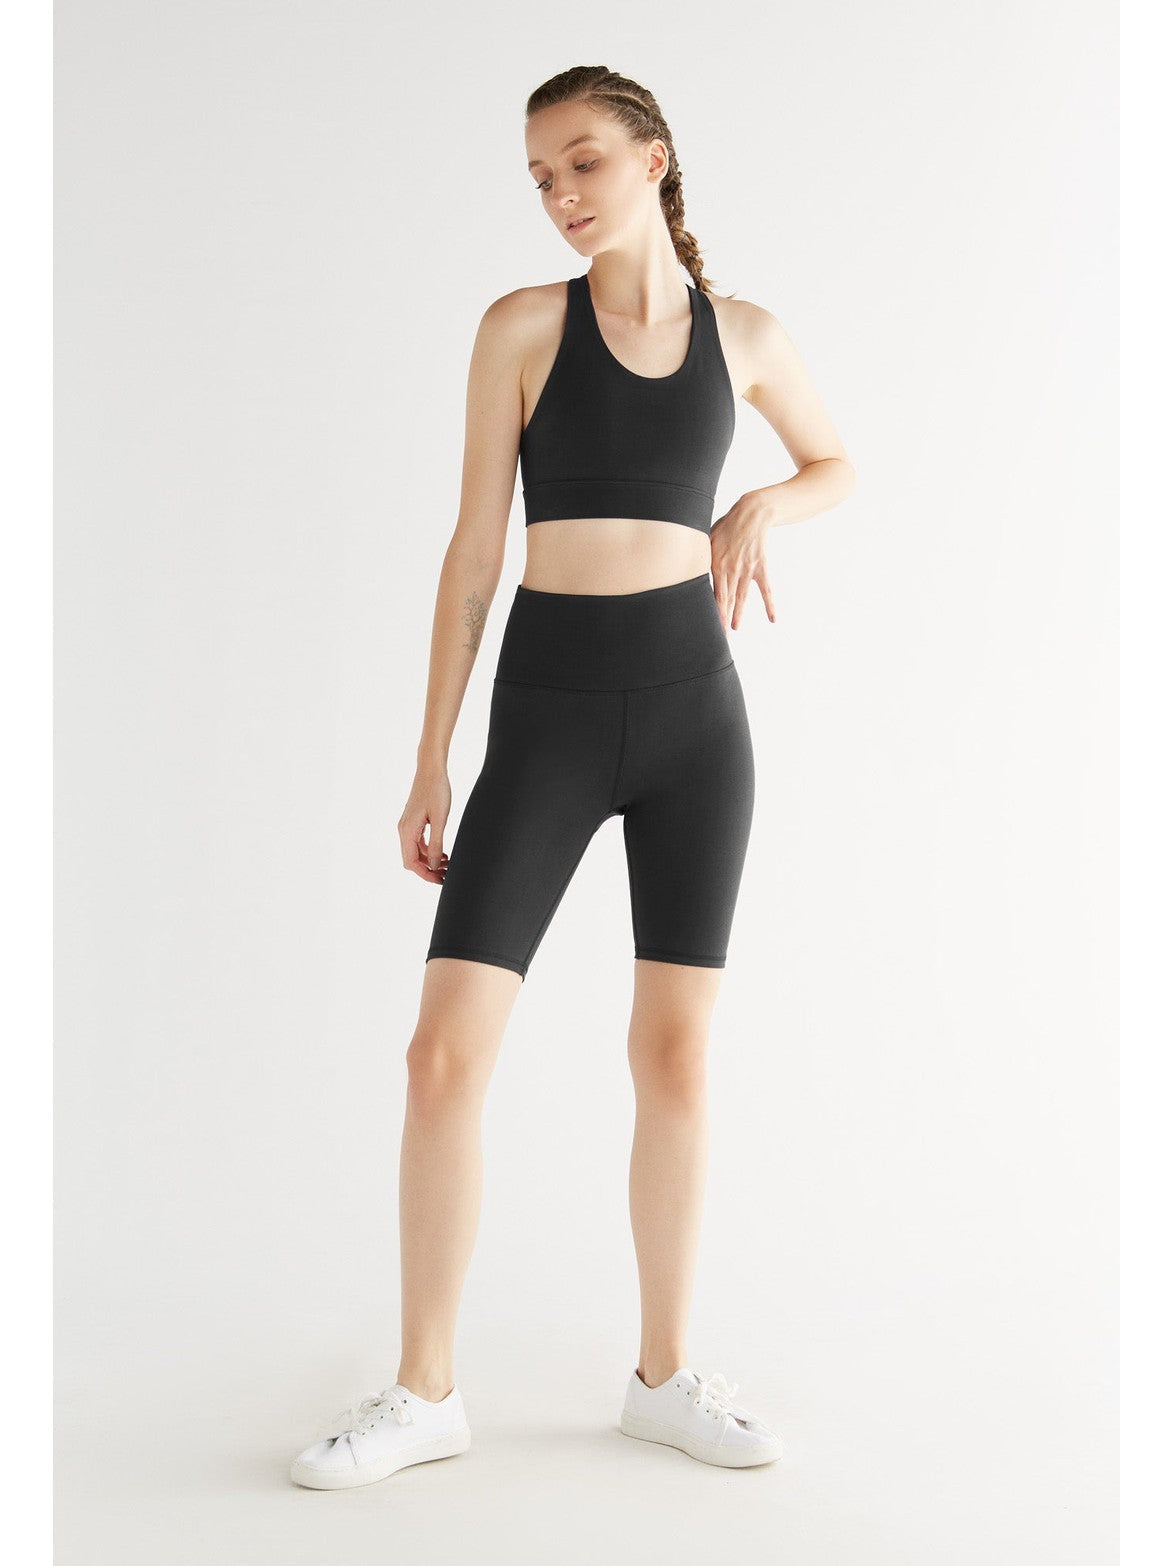 T1331-01 | Women Fit Shorts - Black